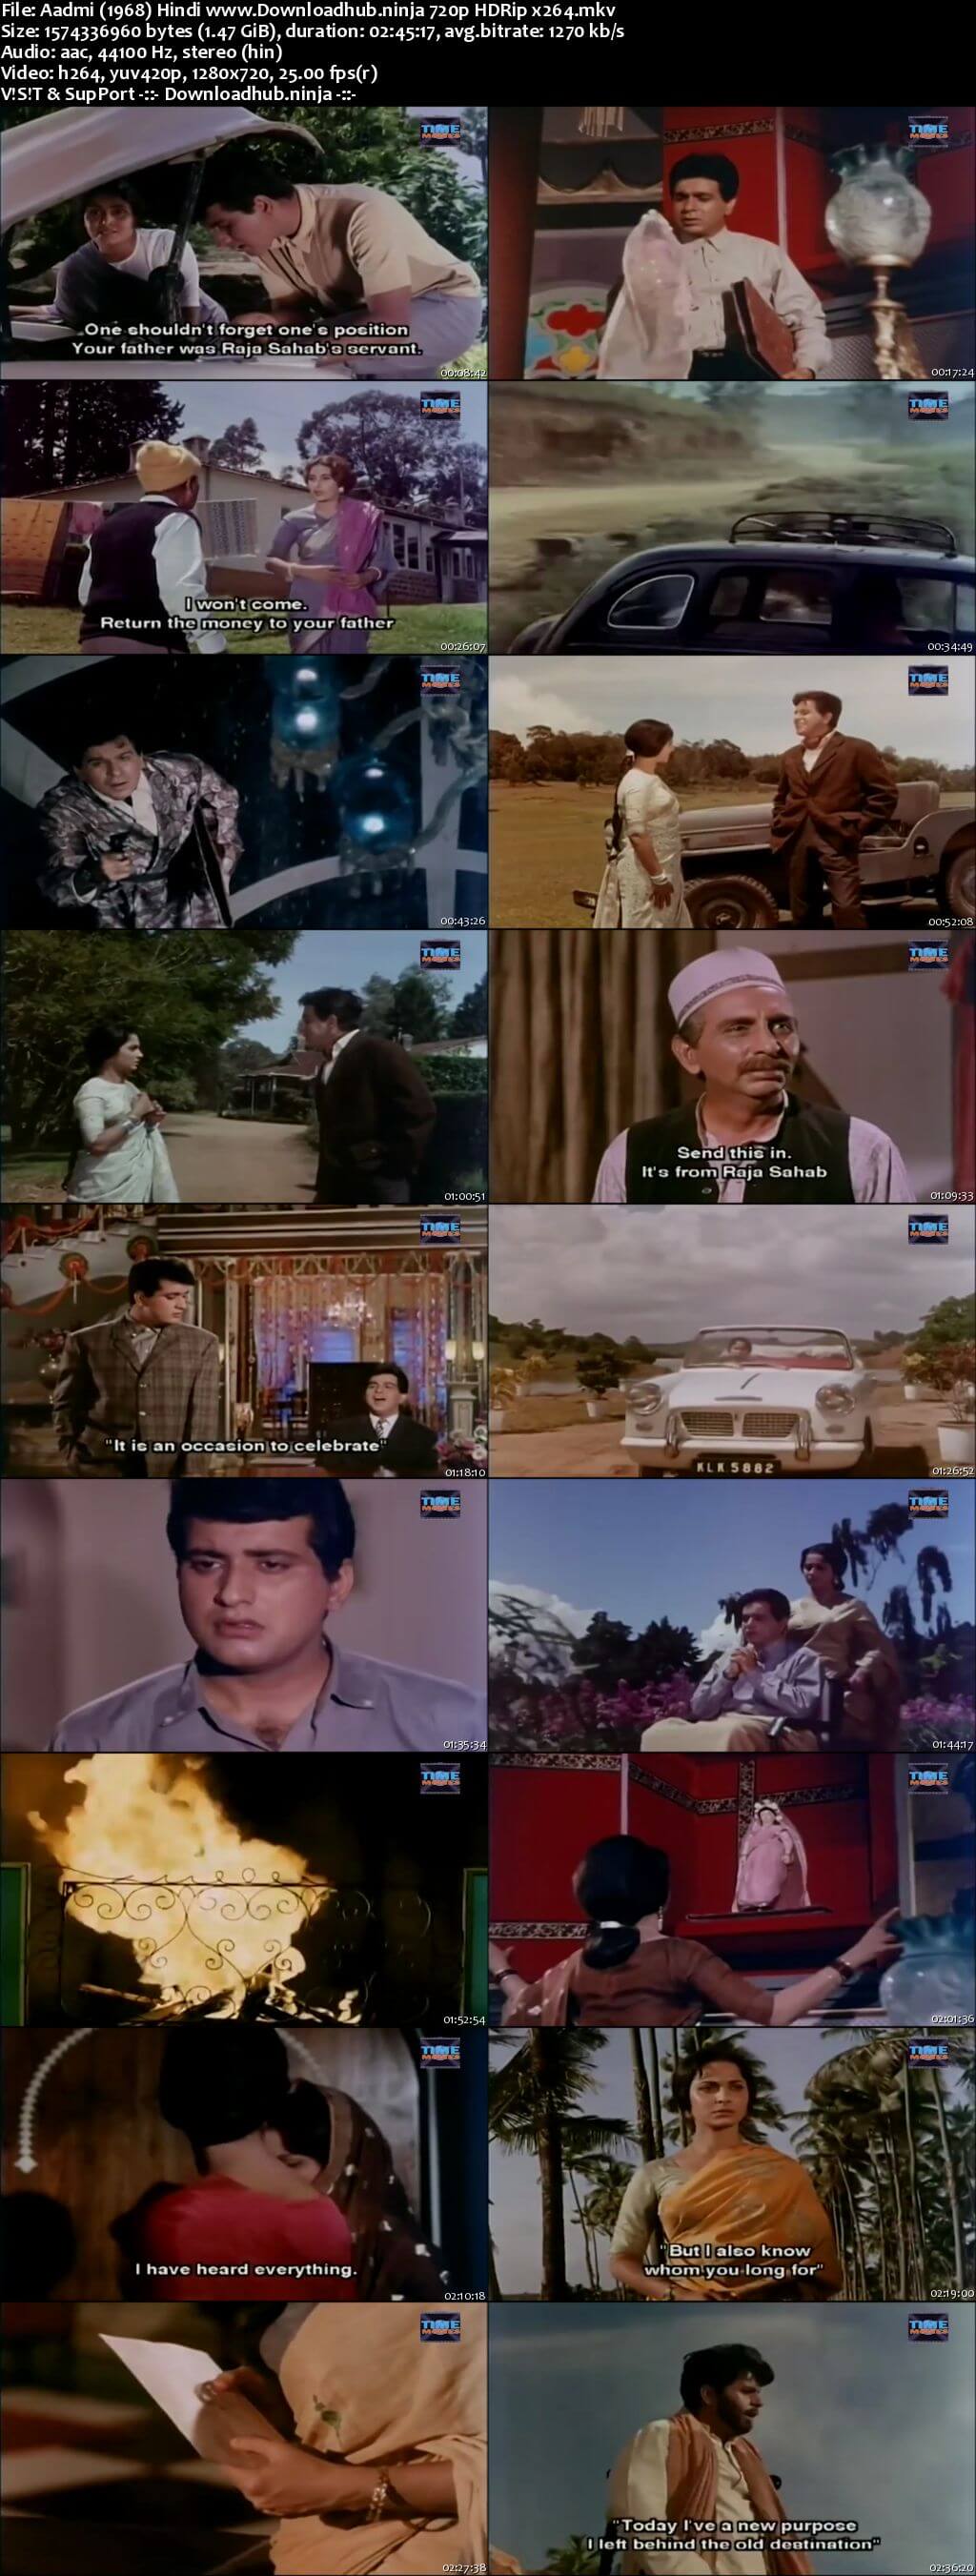 Aadmi 1968 Hindi 720p HDRip x264